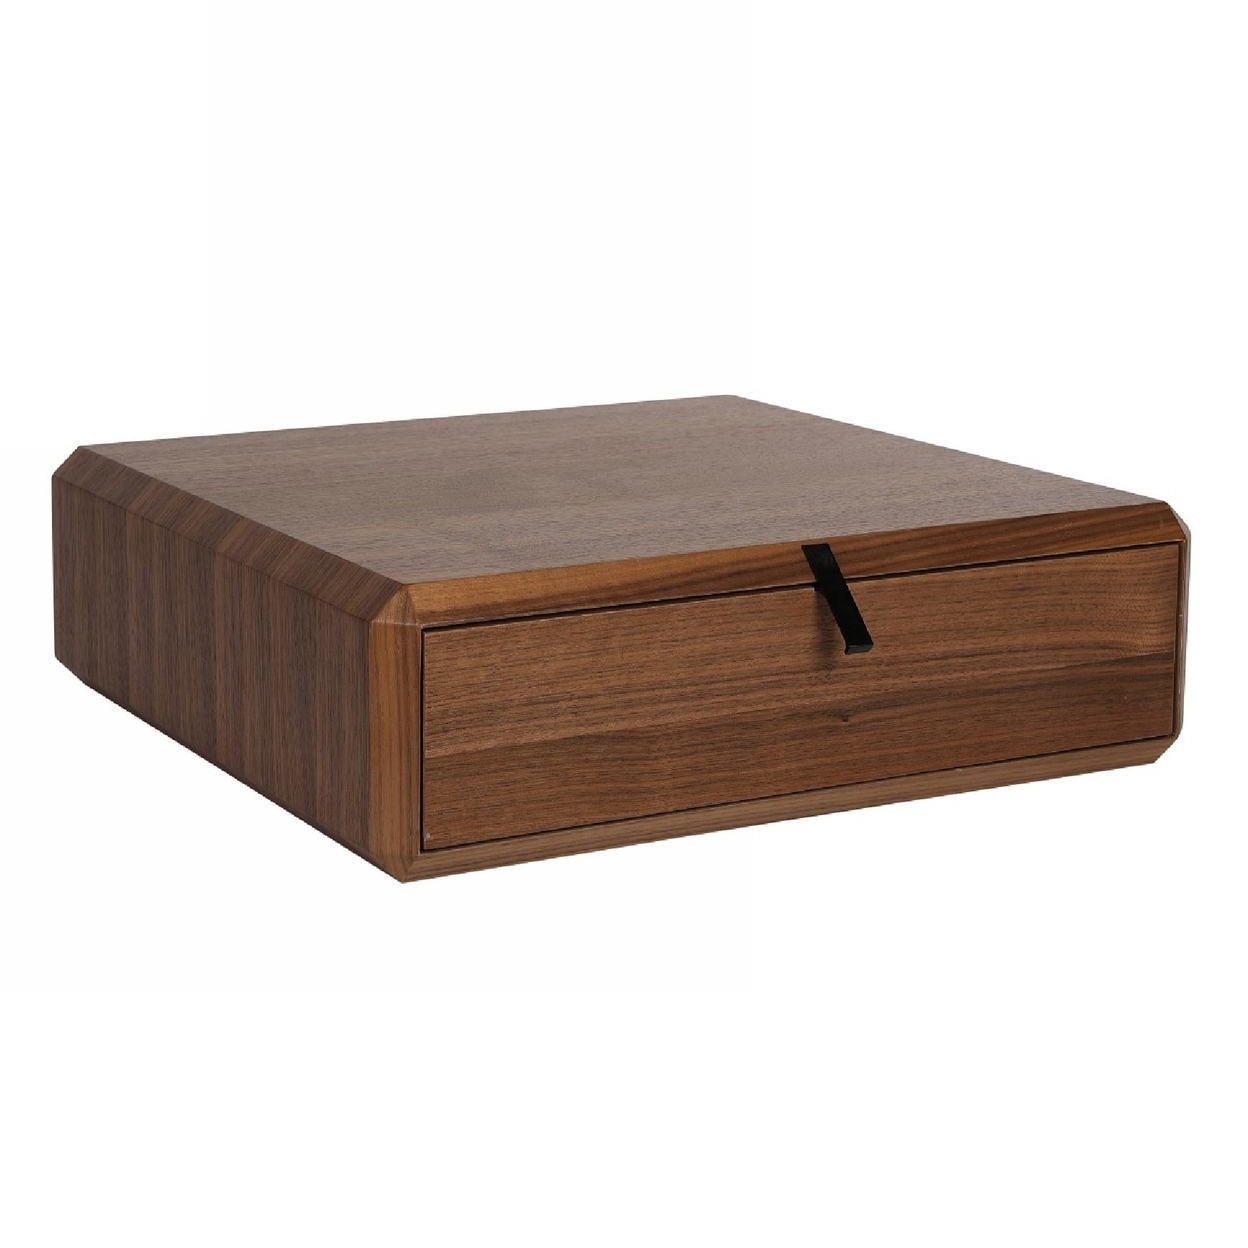 20 Inch Nightstand Drawer Box, Beveled Edges, Angled Handles, Brown Wood- Saltoro Sherpi